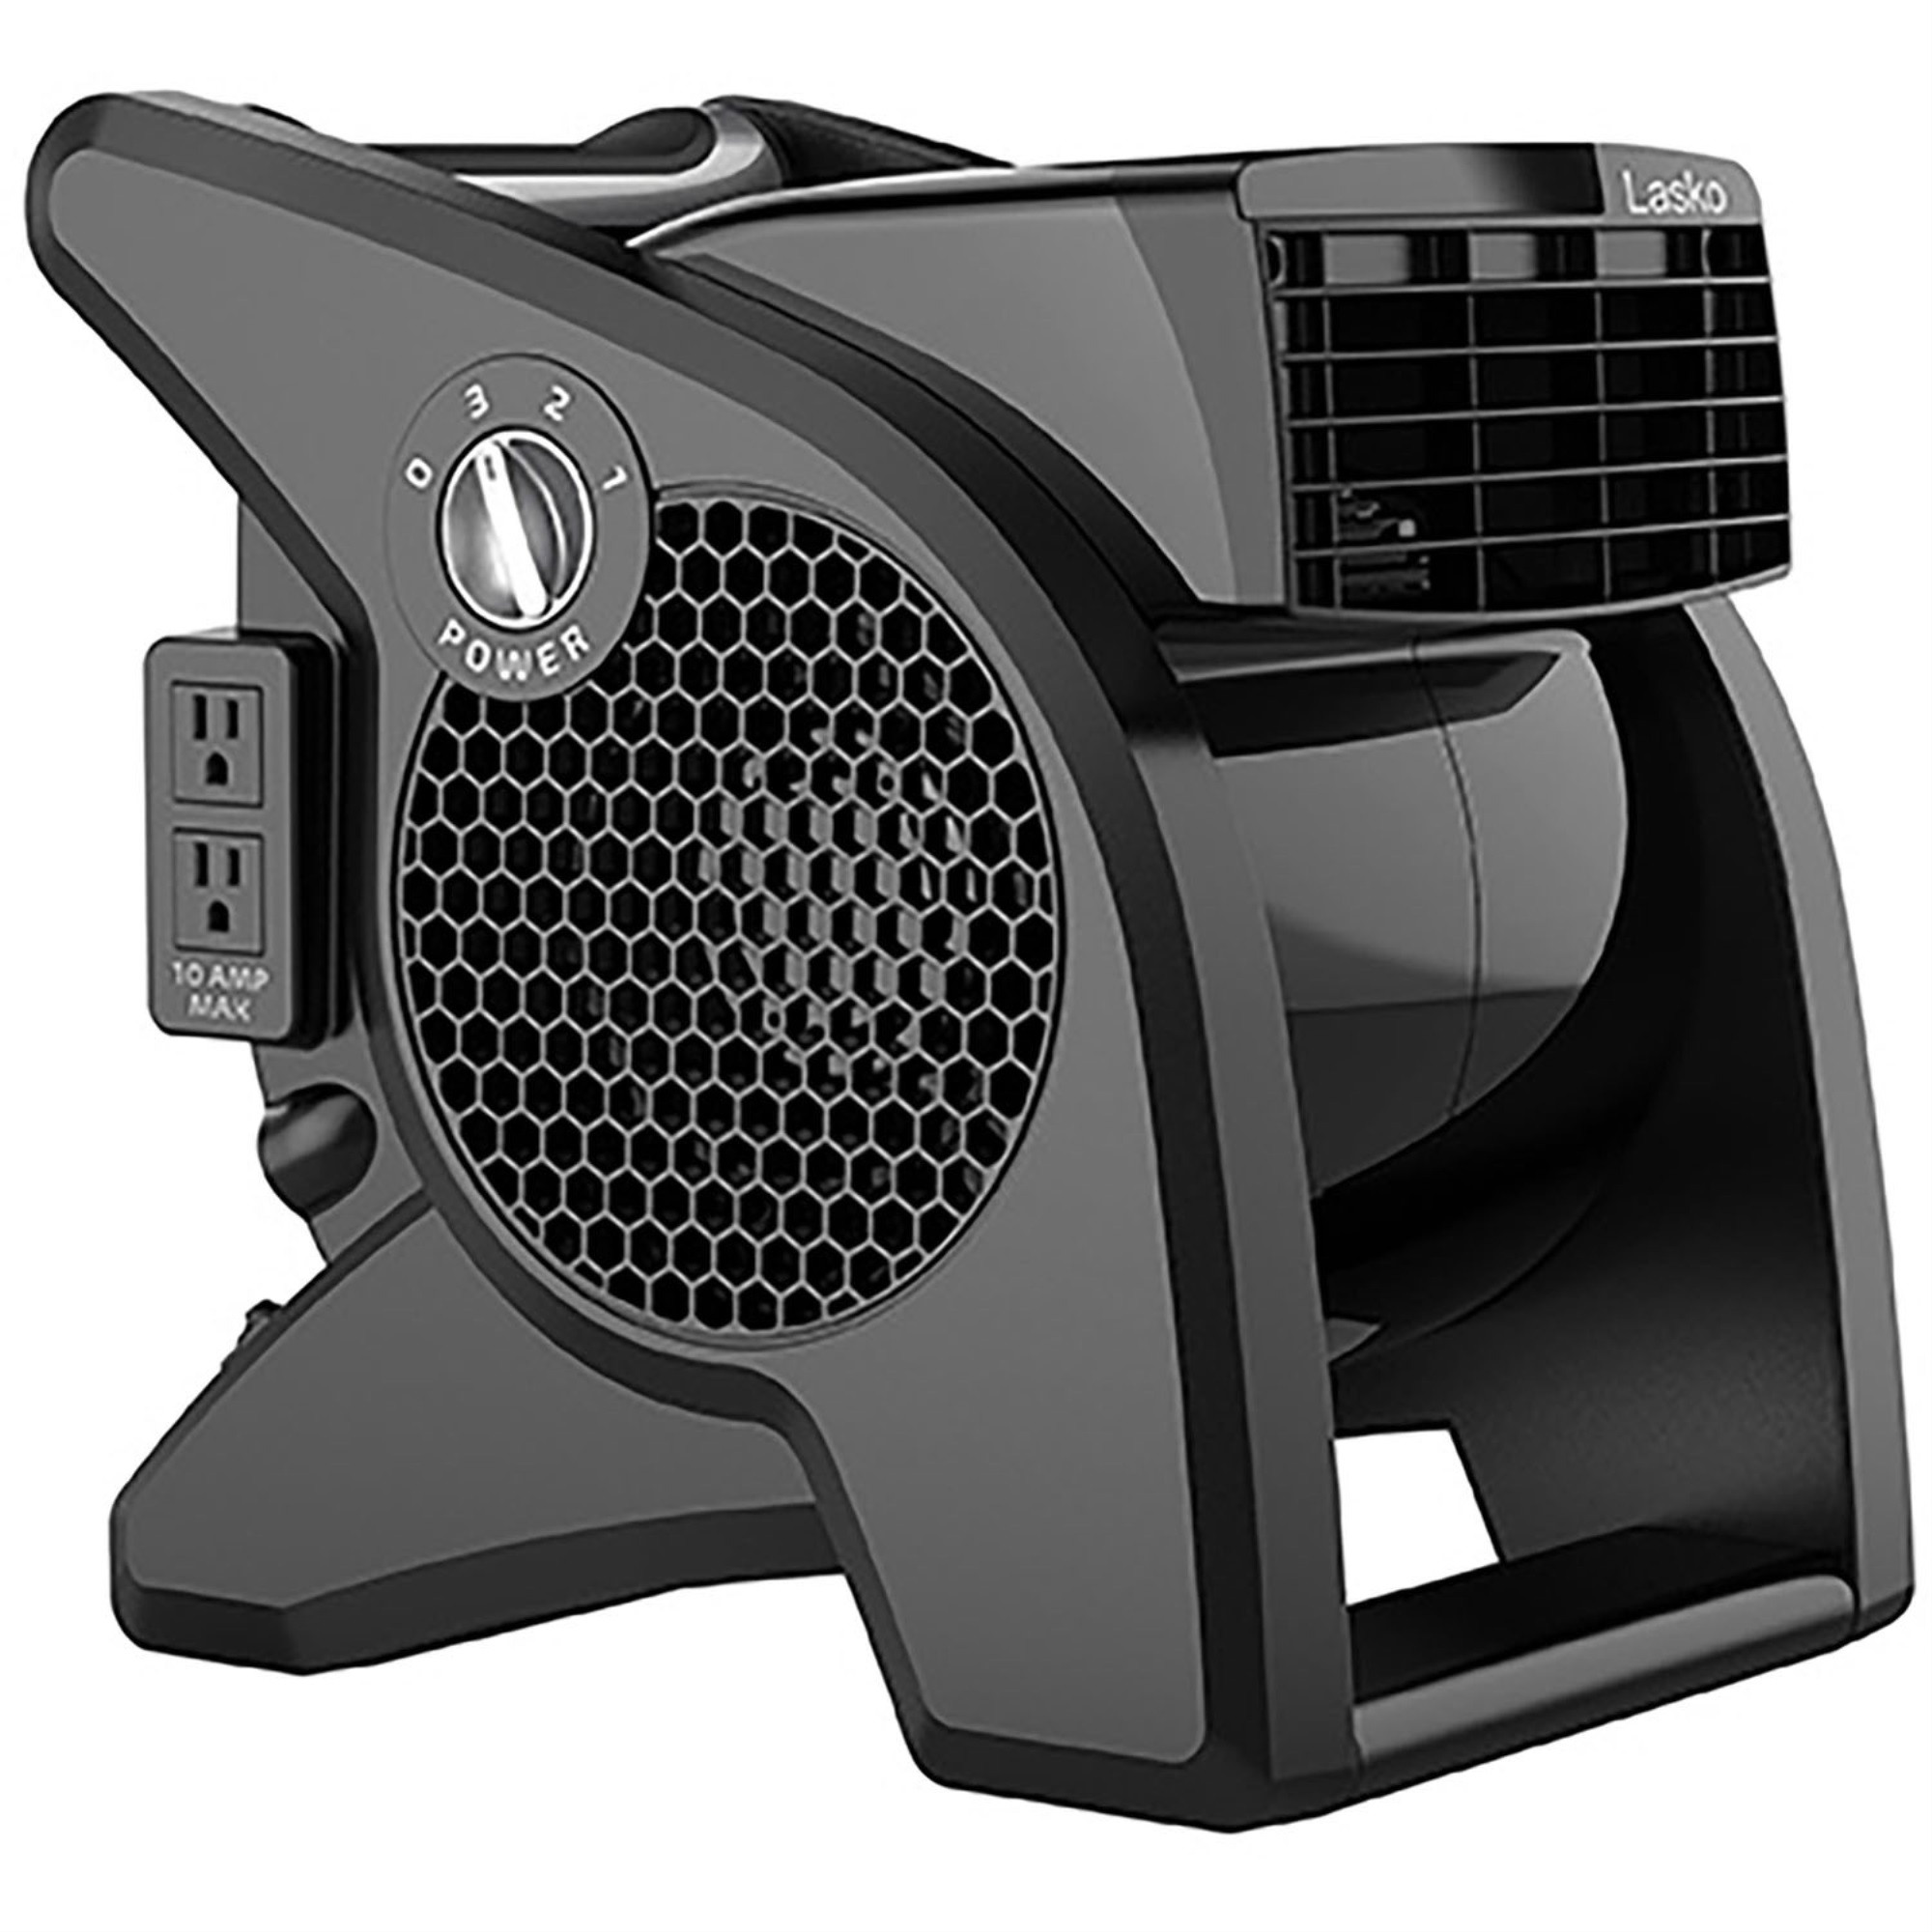 Lasko Products U15617 Pro-Performance Pivoting Blower Utility Fan